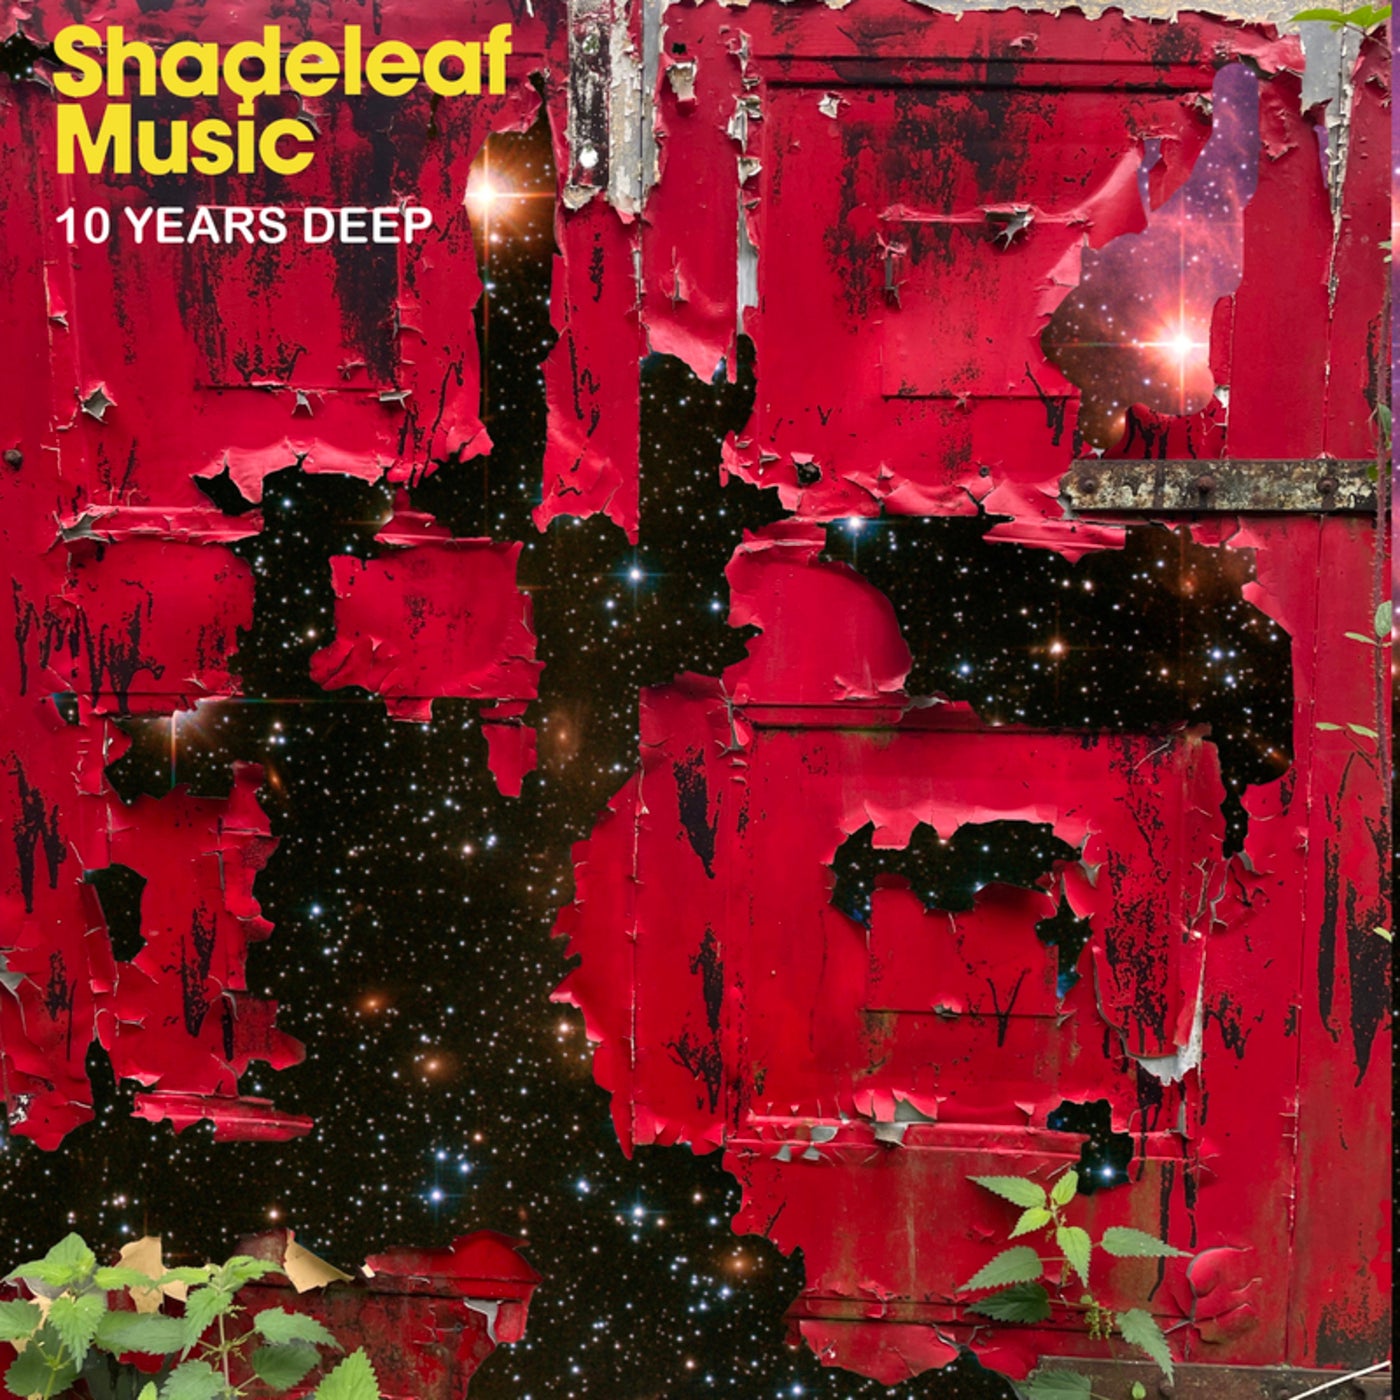 Shadeleaf Music